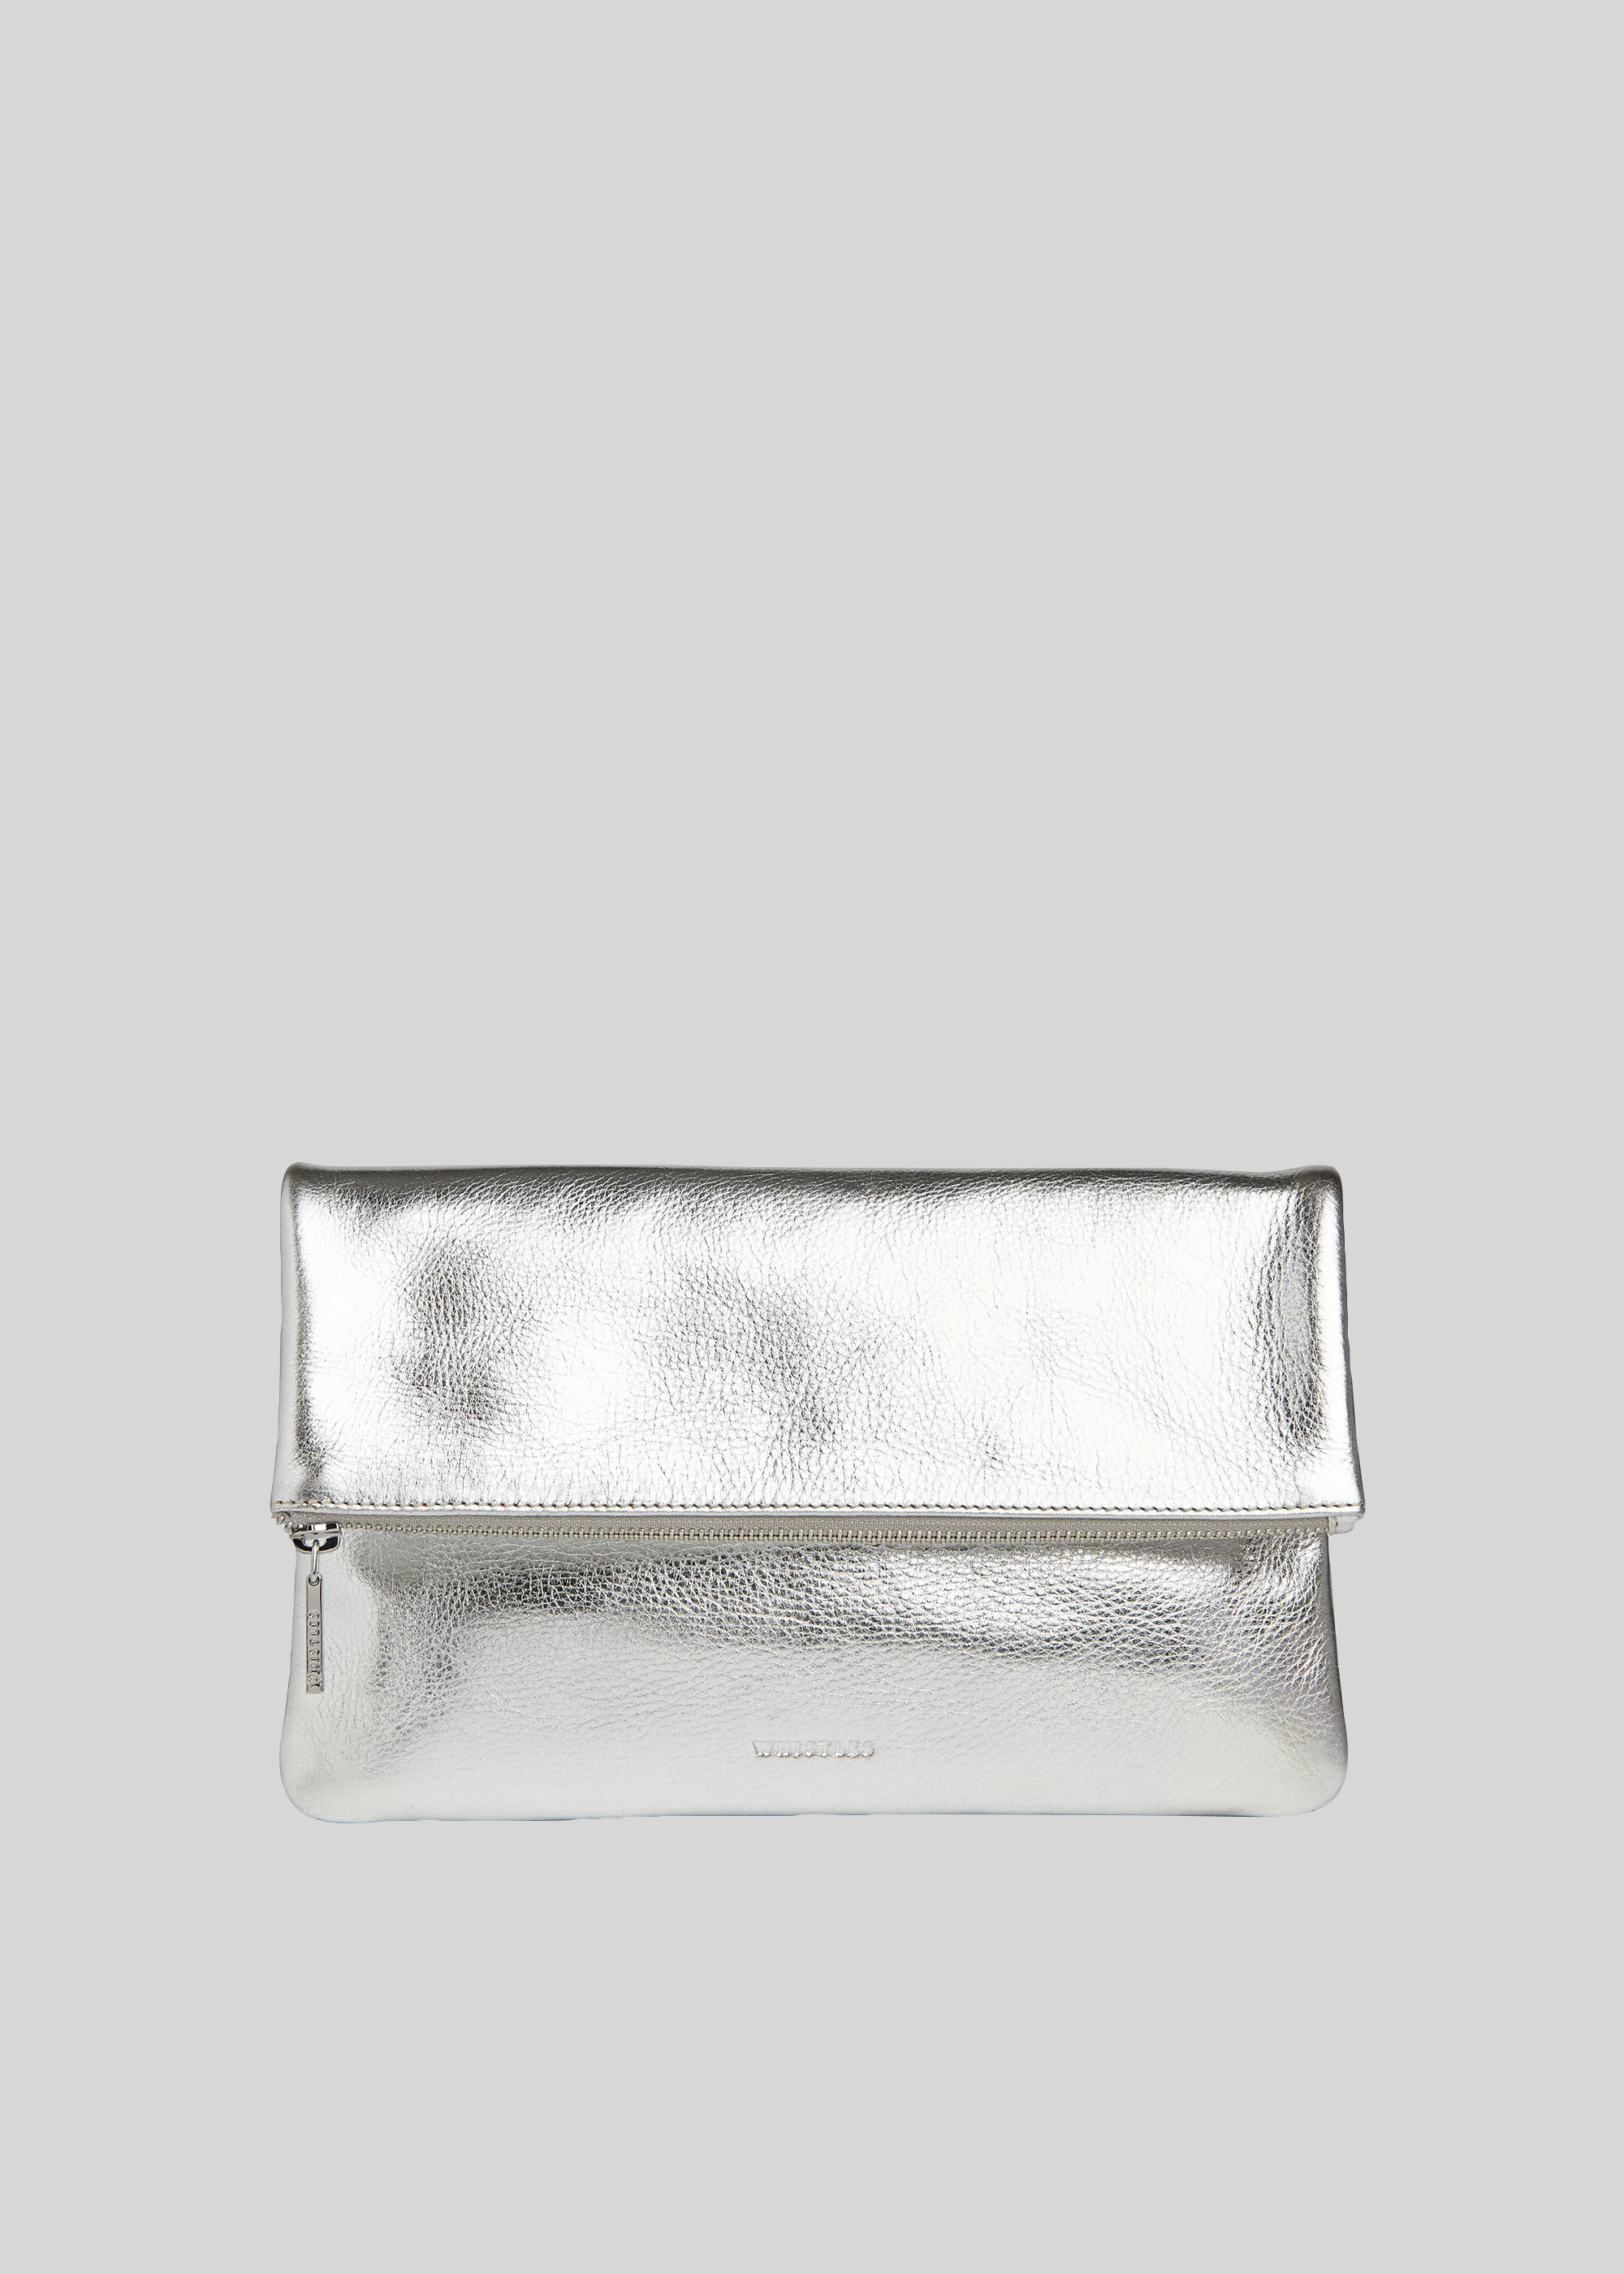 silver clutch bag